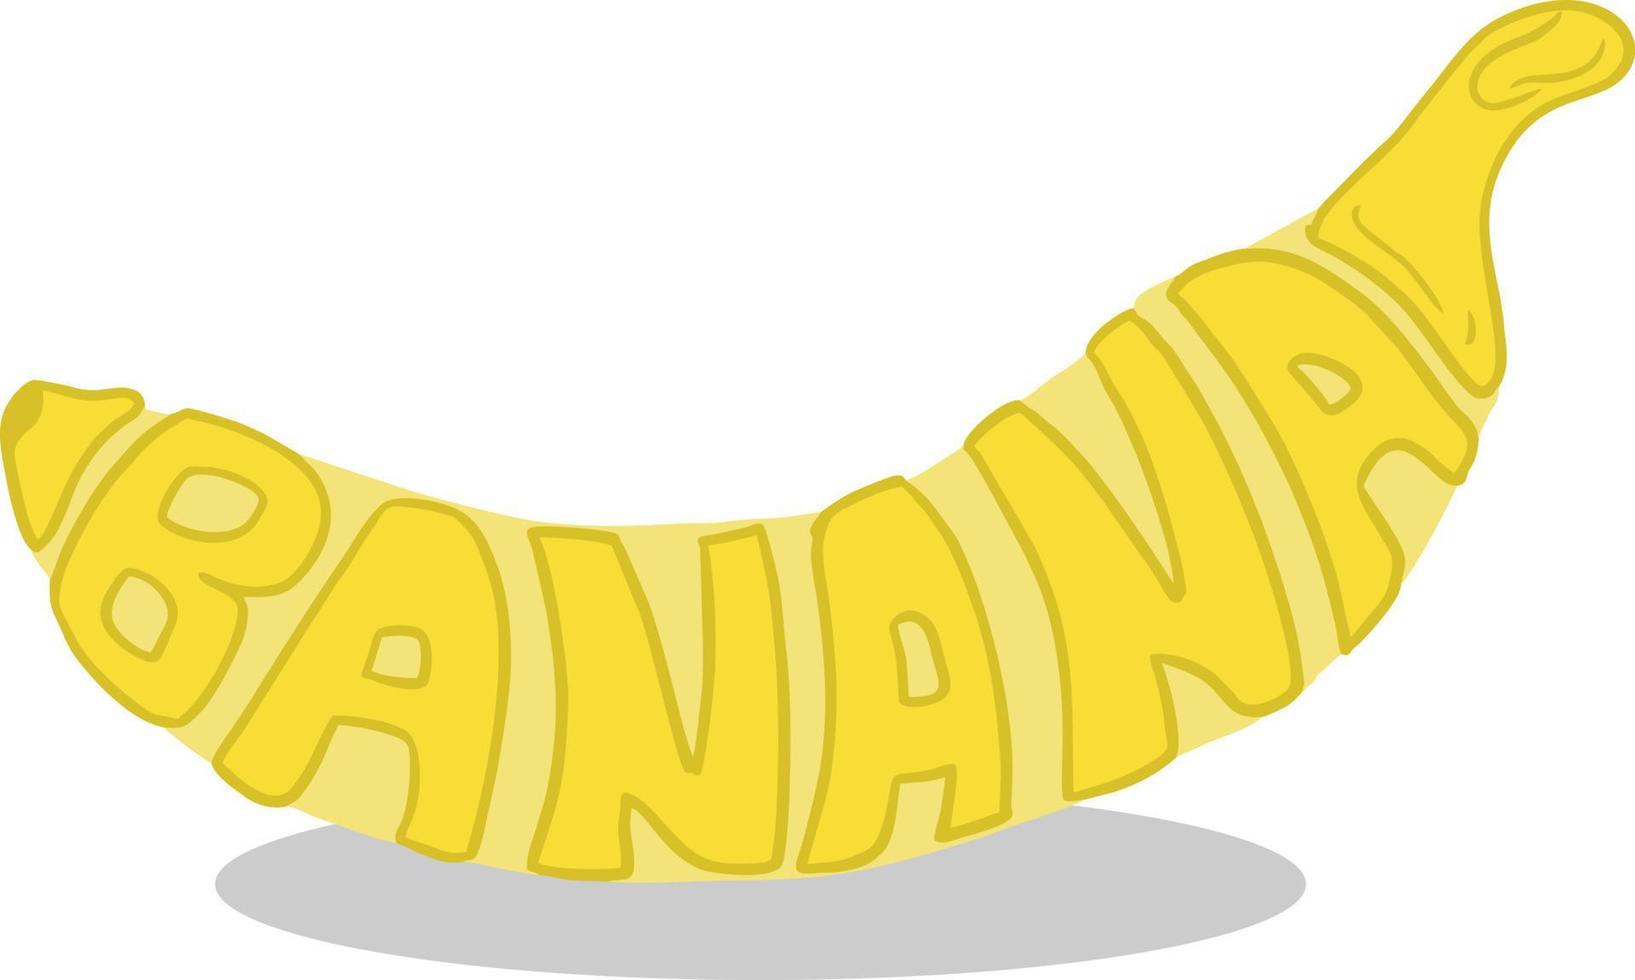 Banana Fruit vector image illustrations